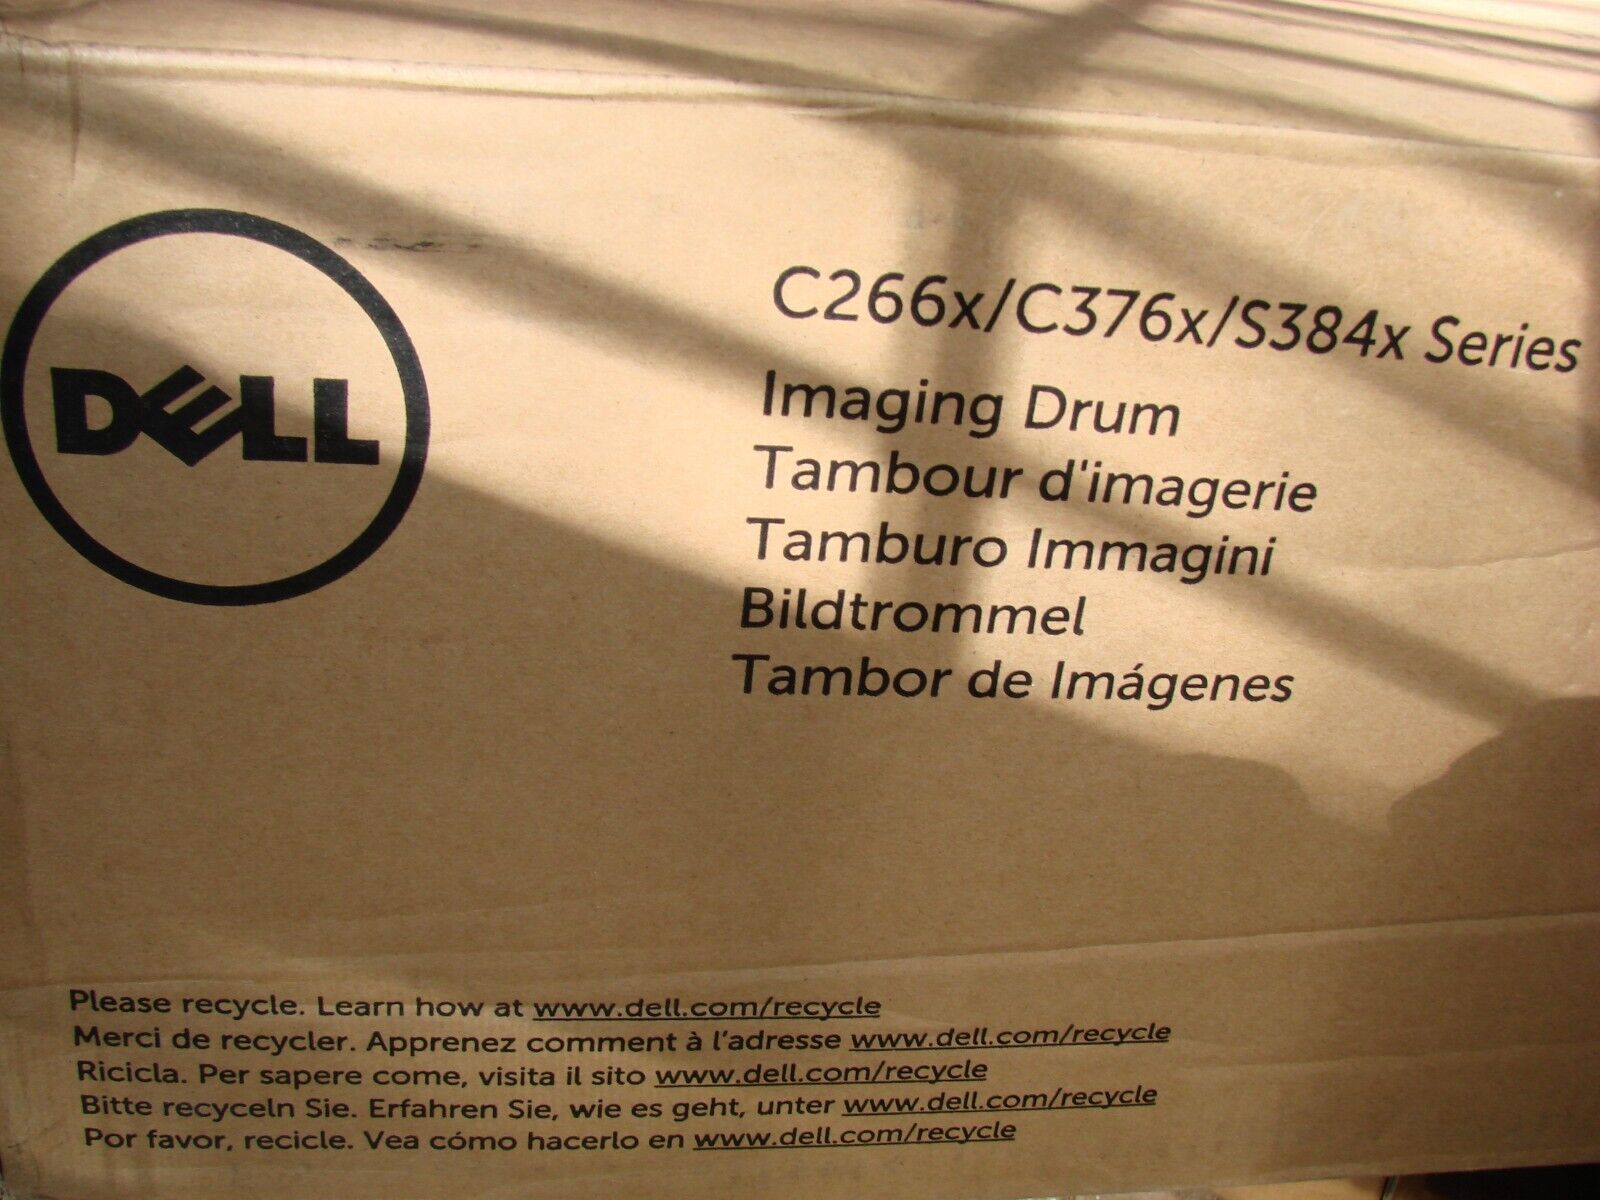 Dell Twr5p Imaging Drum Kit For C3760n/ C3760dn/ C3765dnf Color Laser Printers